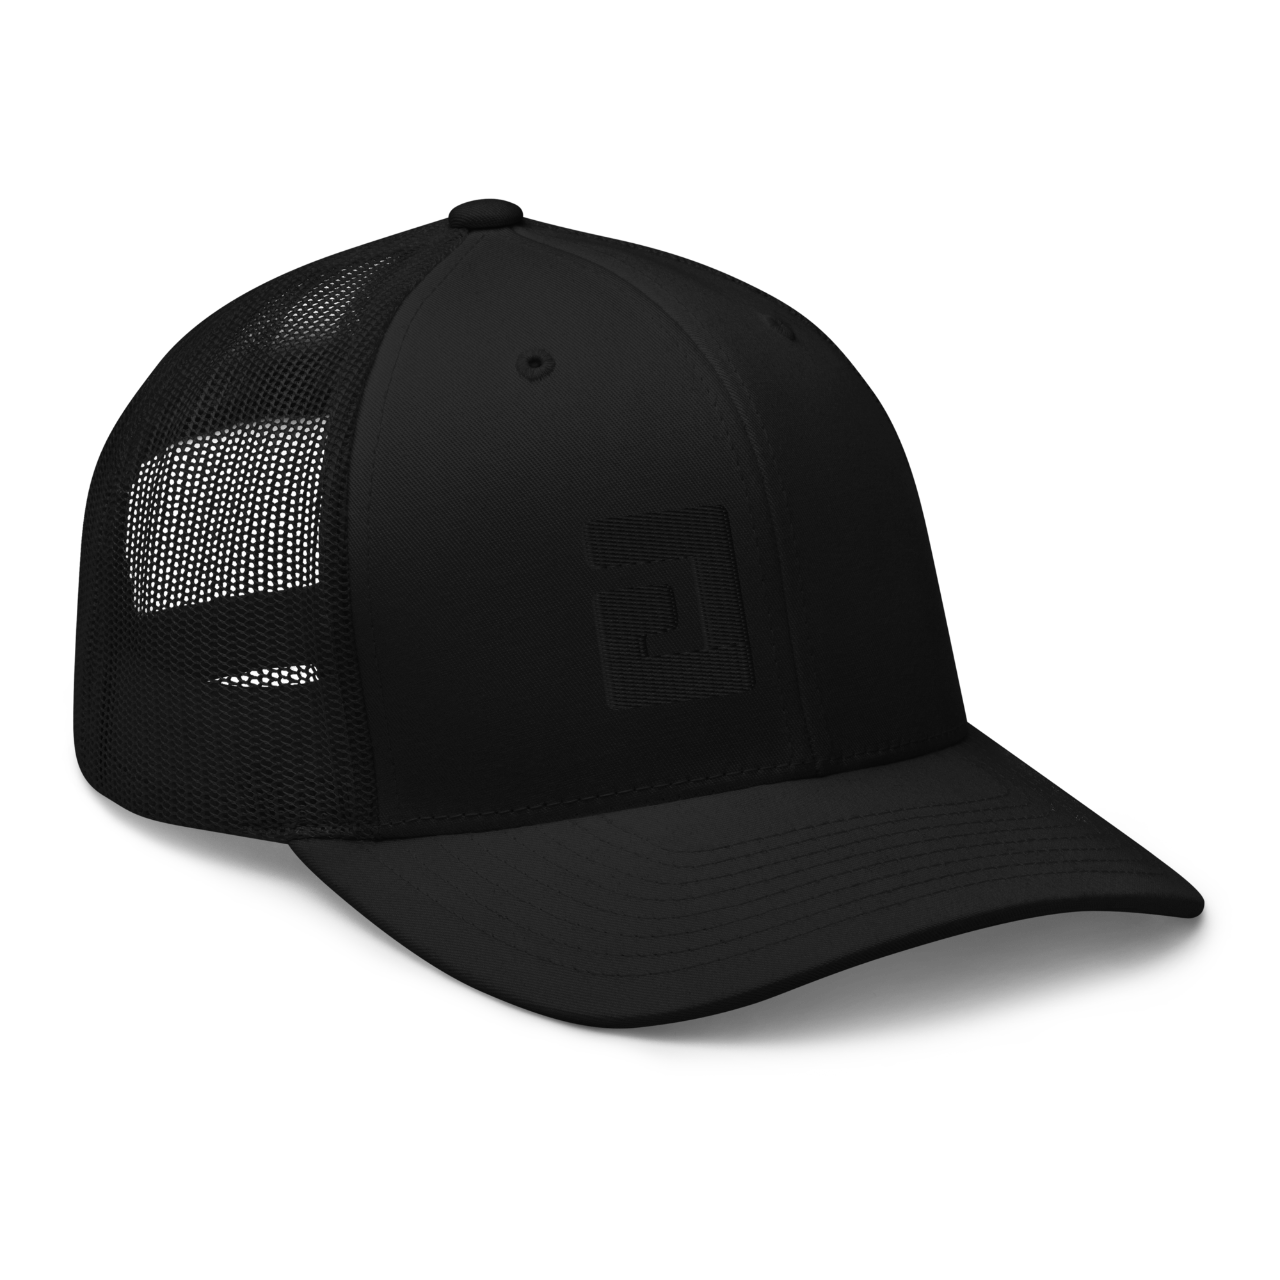 axsgtr axess electronics guitar music industry branded merchandise swag trucker cap hat black stealth